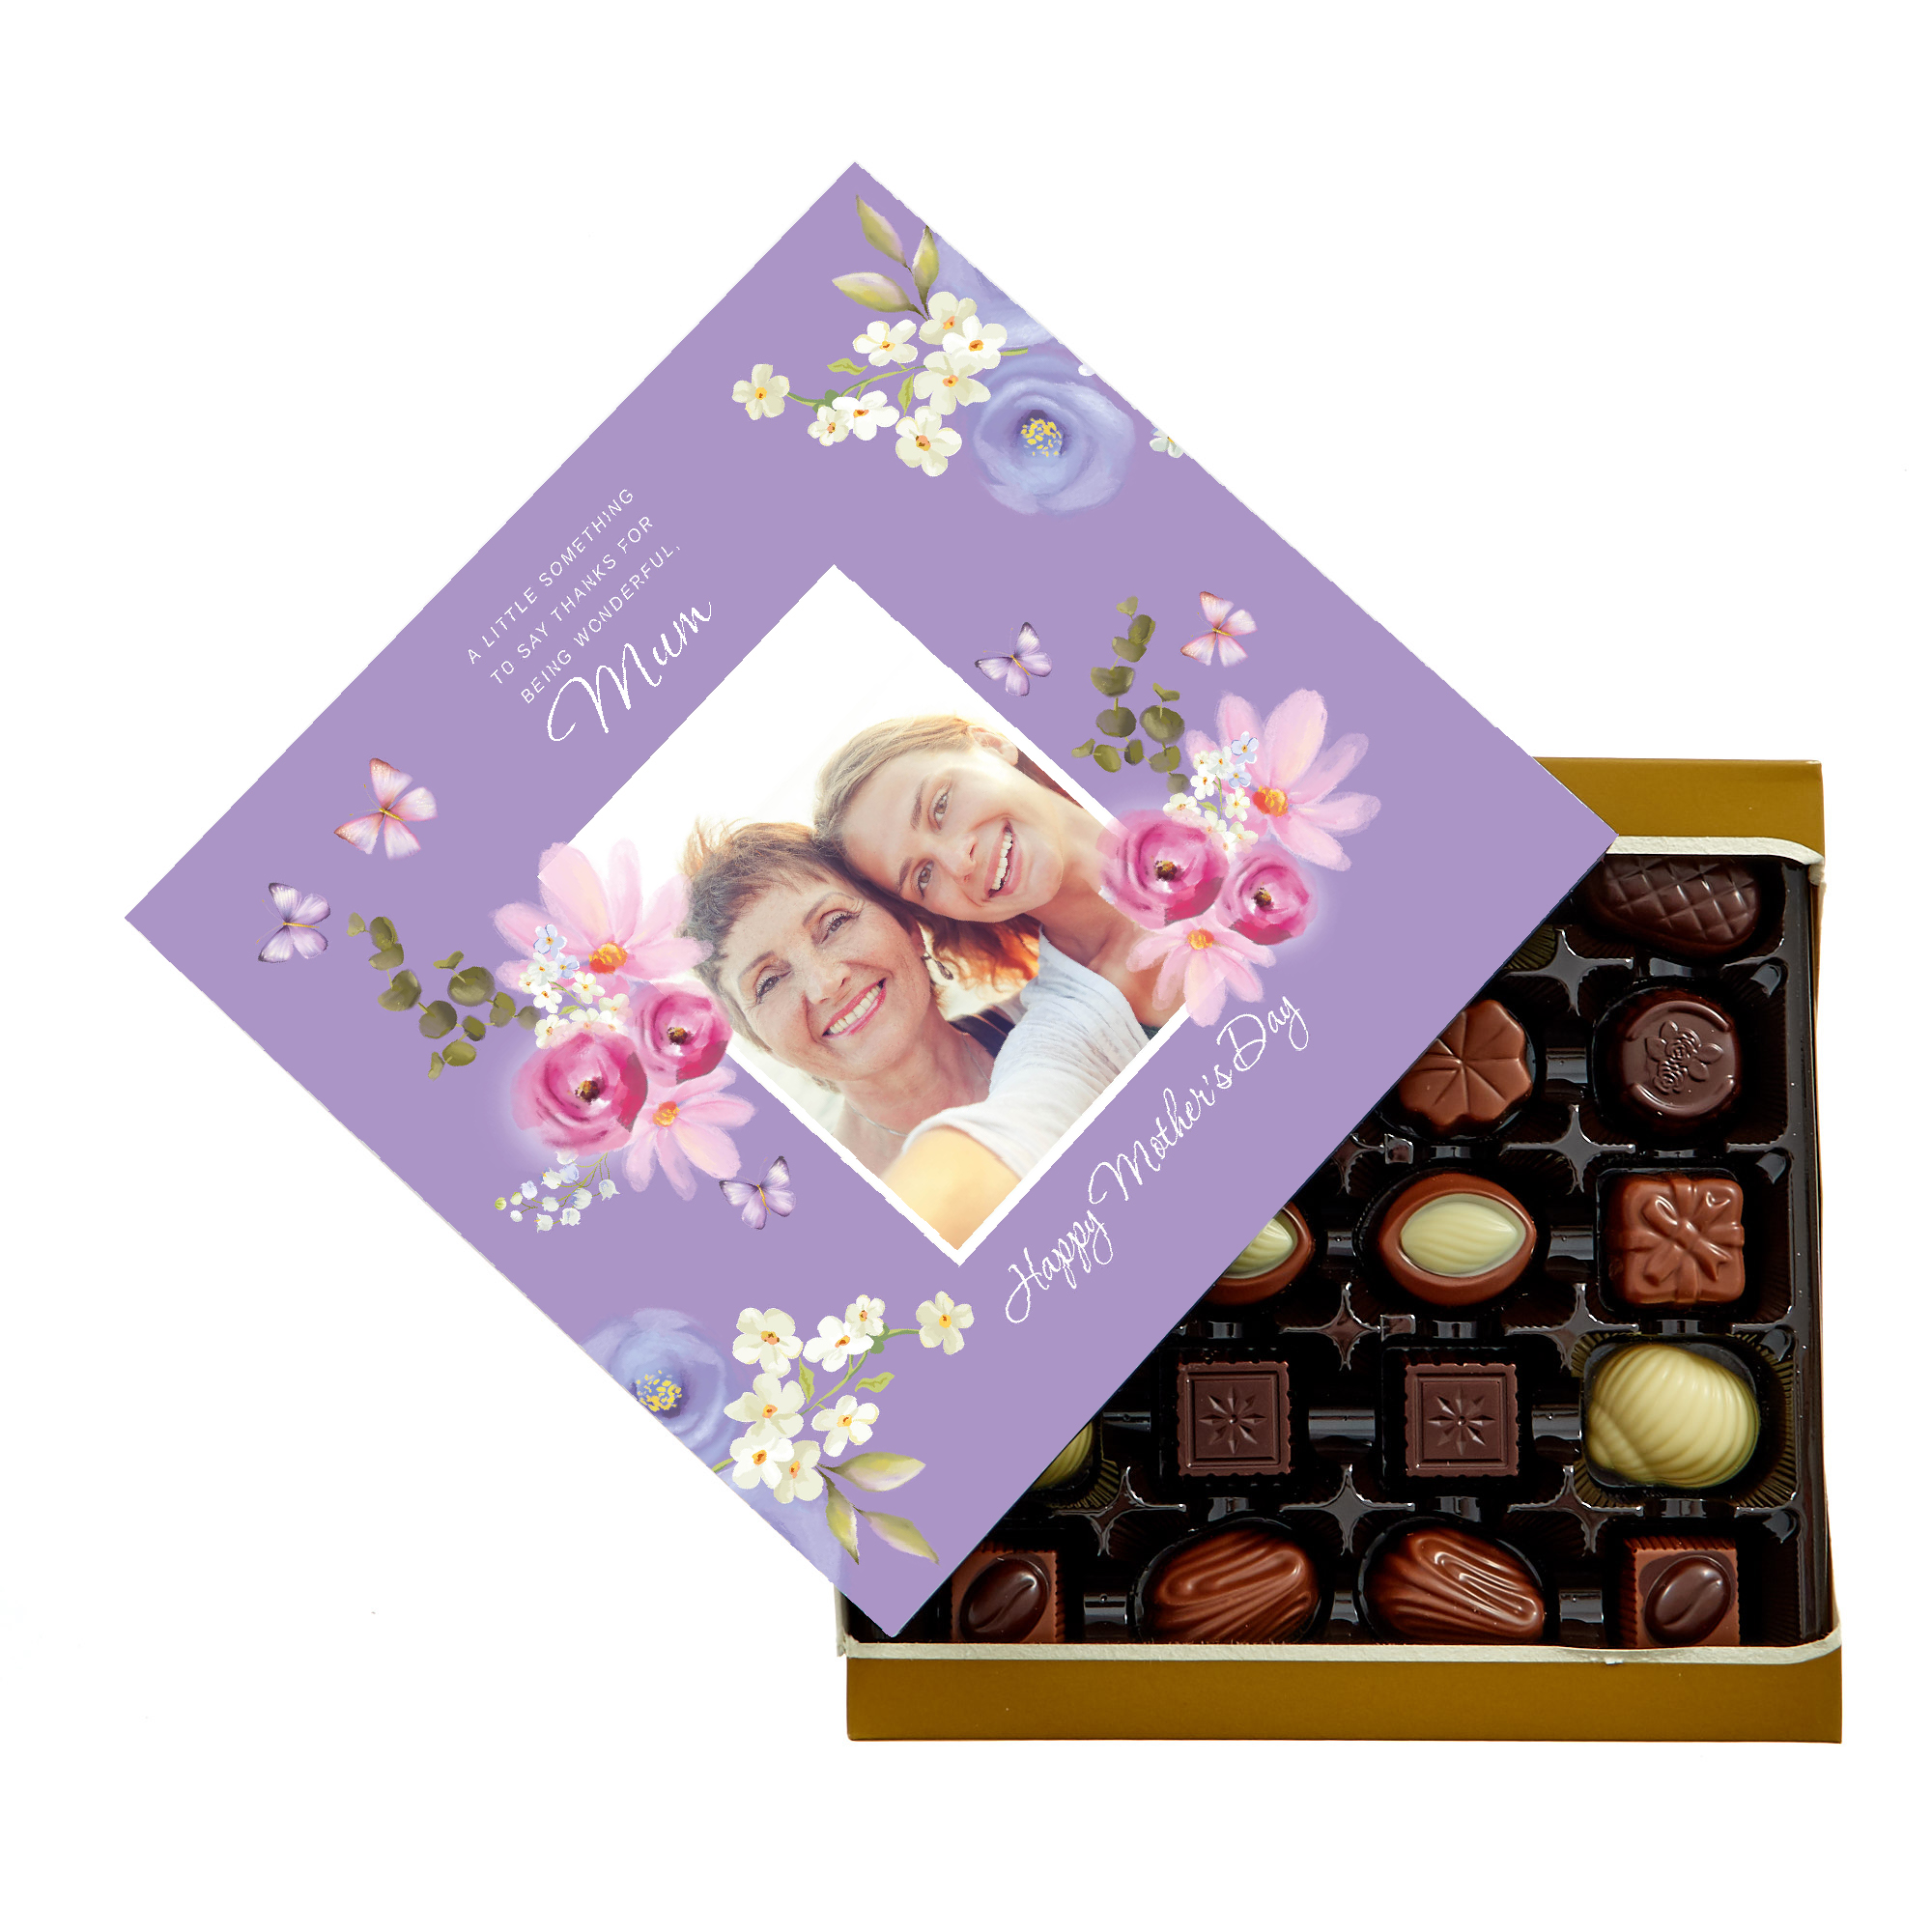 Personalised Belgian Chocolates - Thanks For Being Wonderful